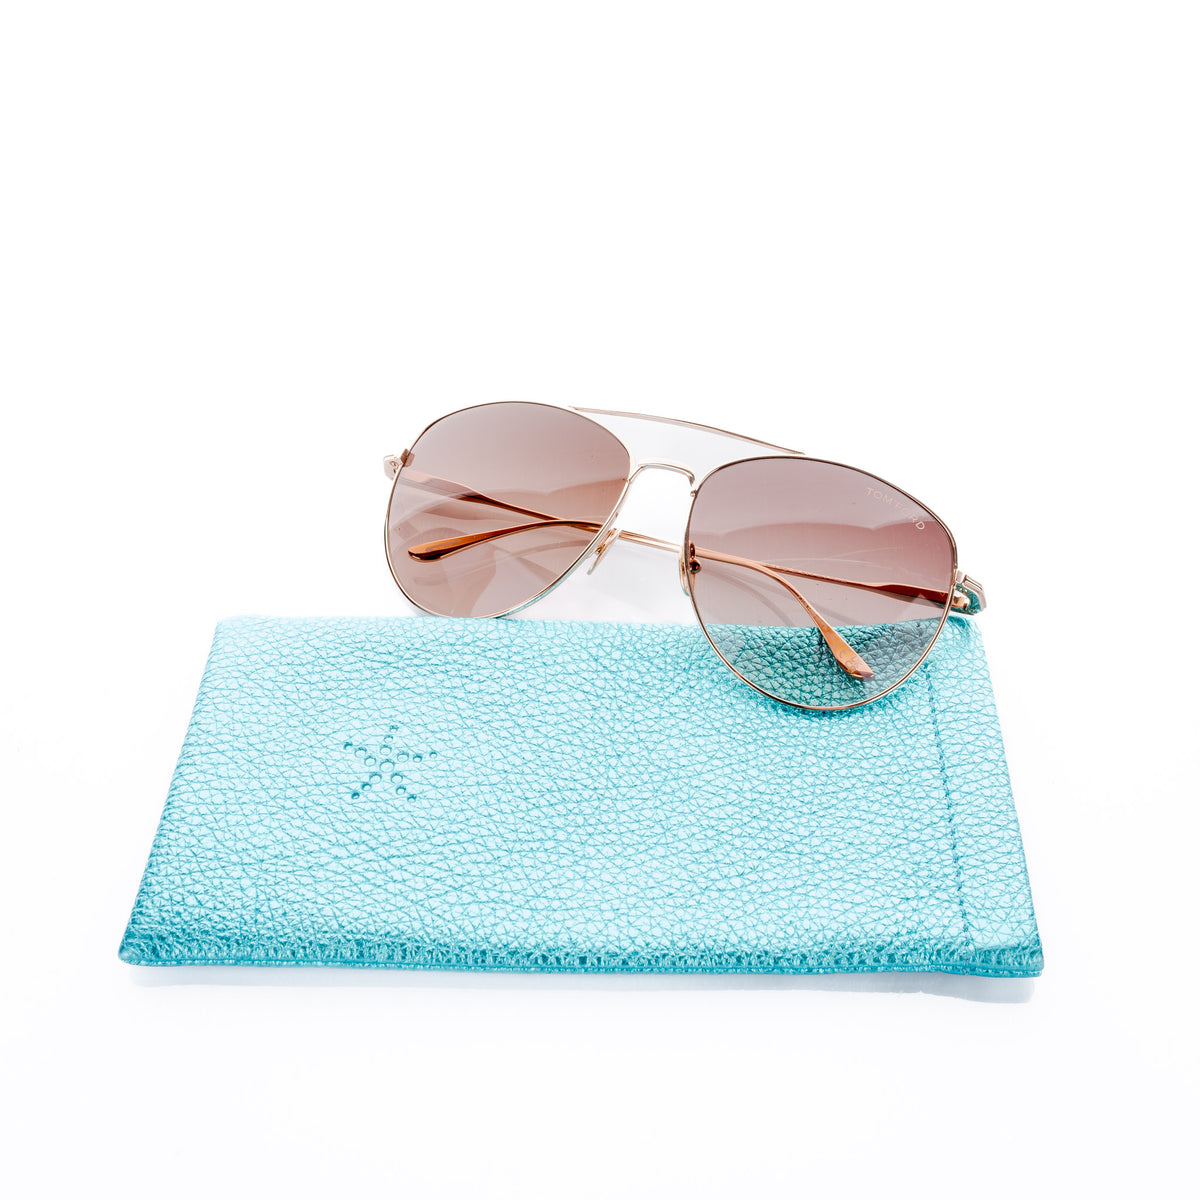 Ocean Blue Metallic Leather Sunglasses Pouch